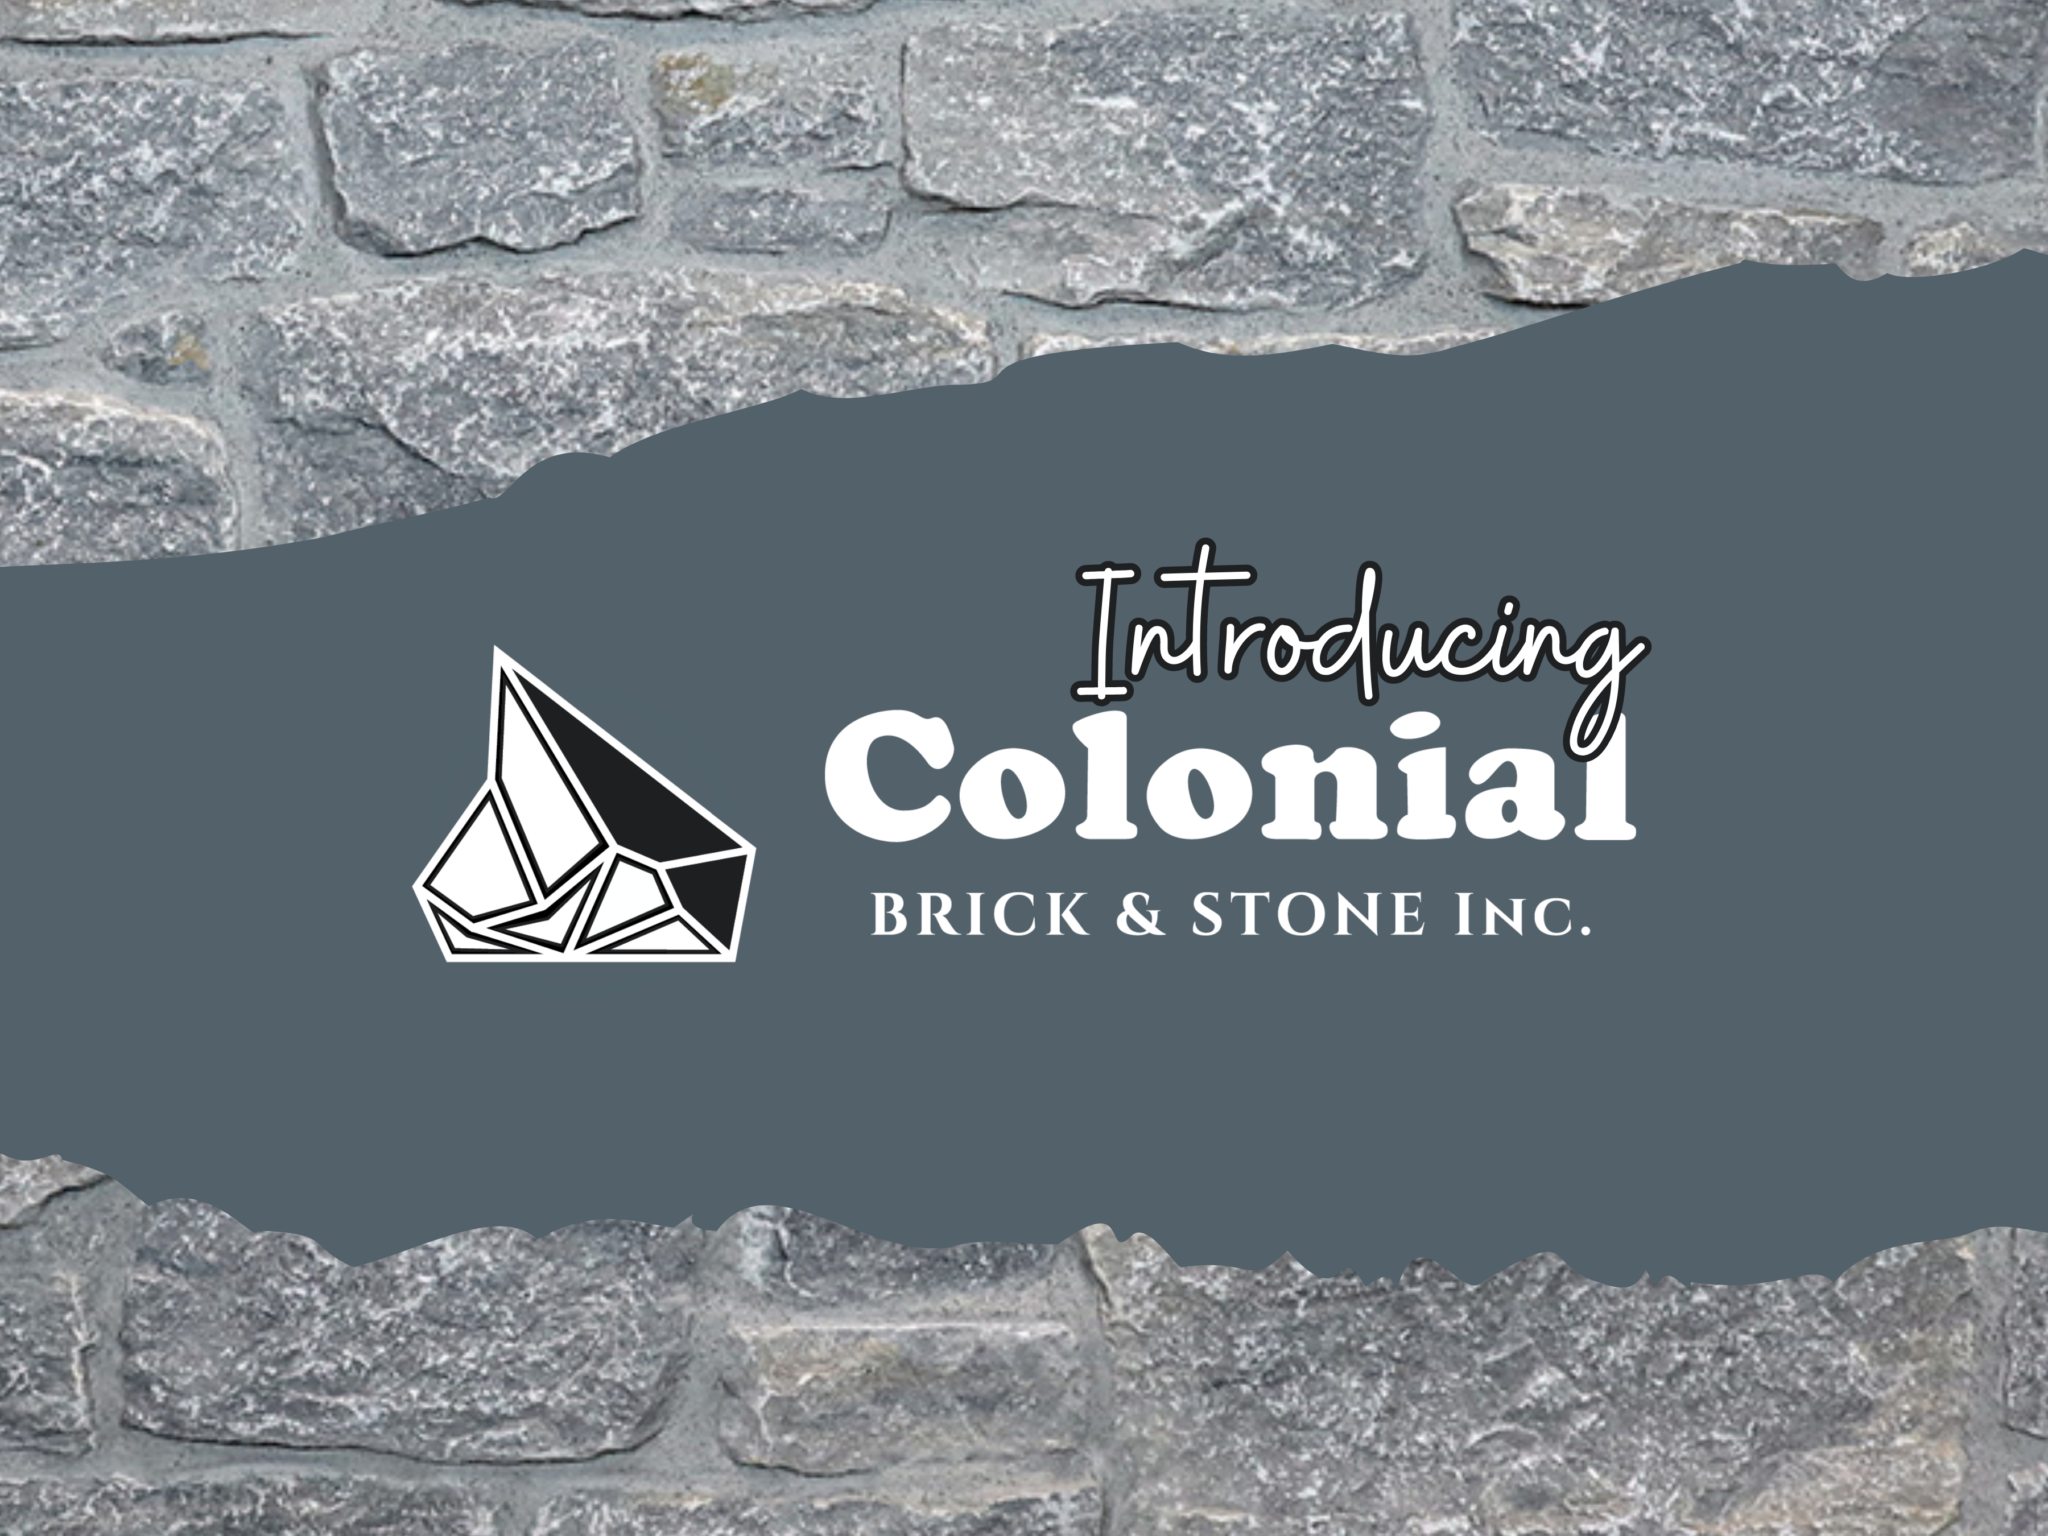 Introducing Colonial Brick & Stone Inc.